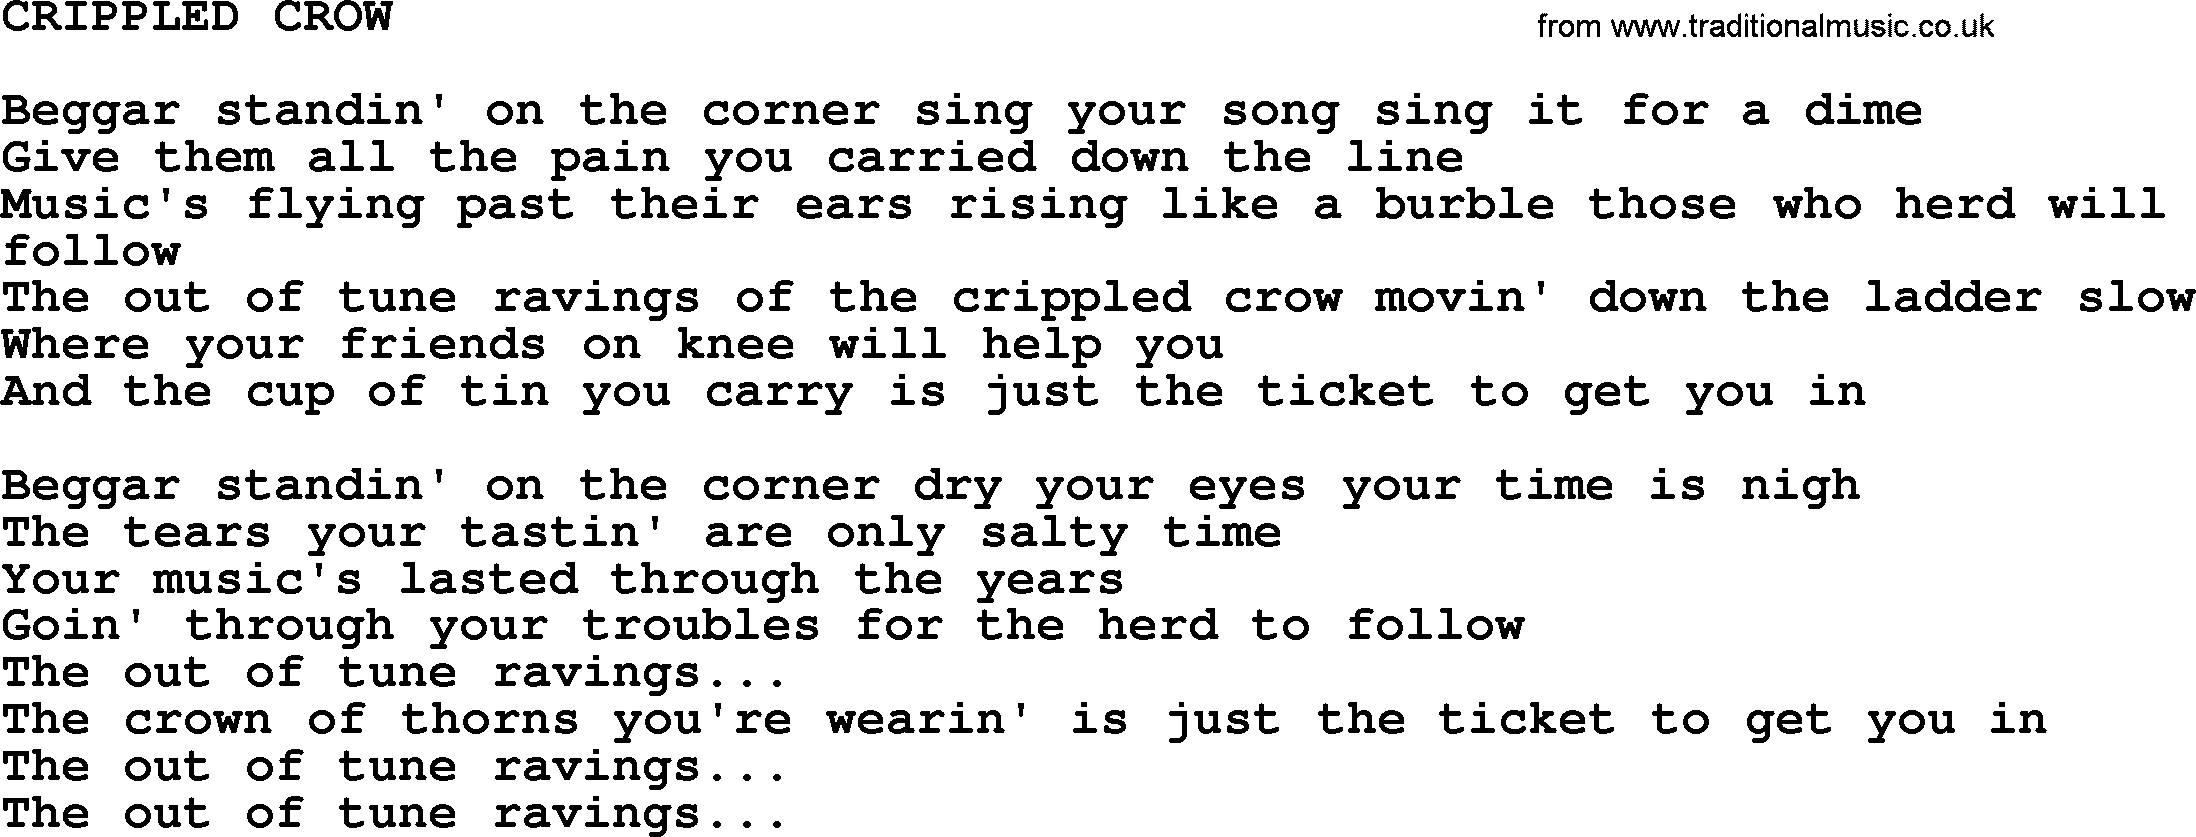 Kris Kristofferson song: Crippled Crow lyrics